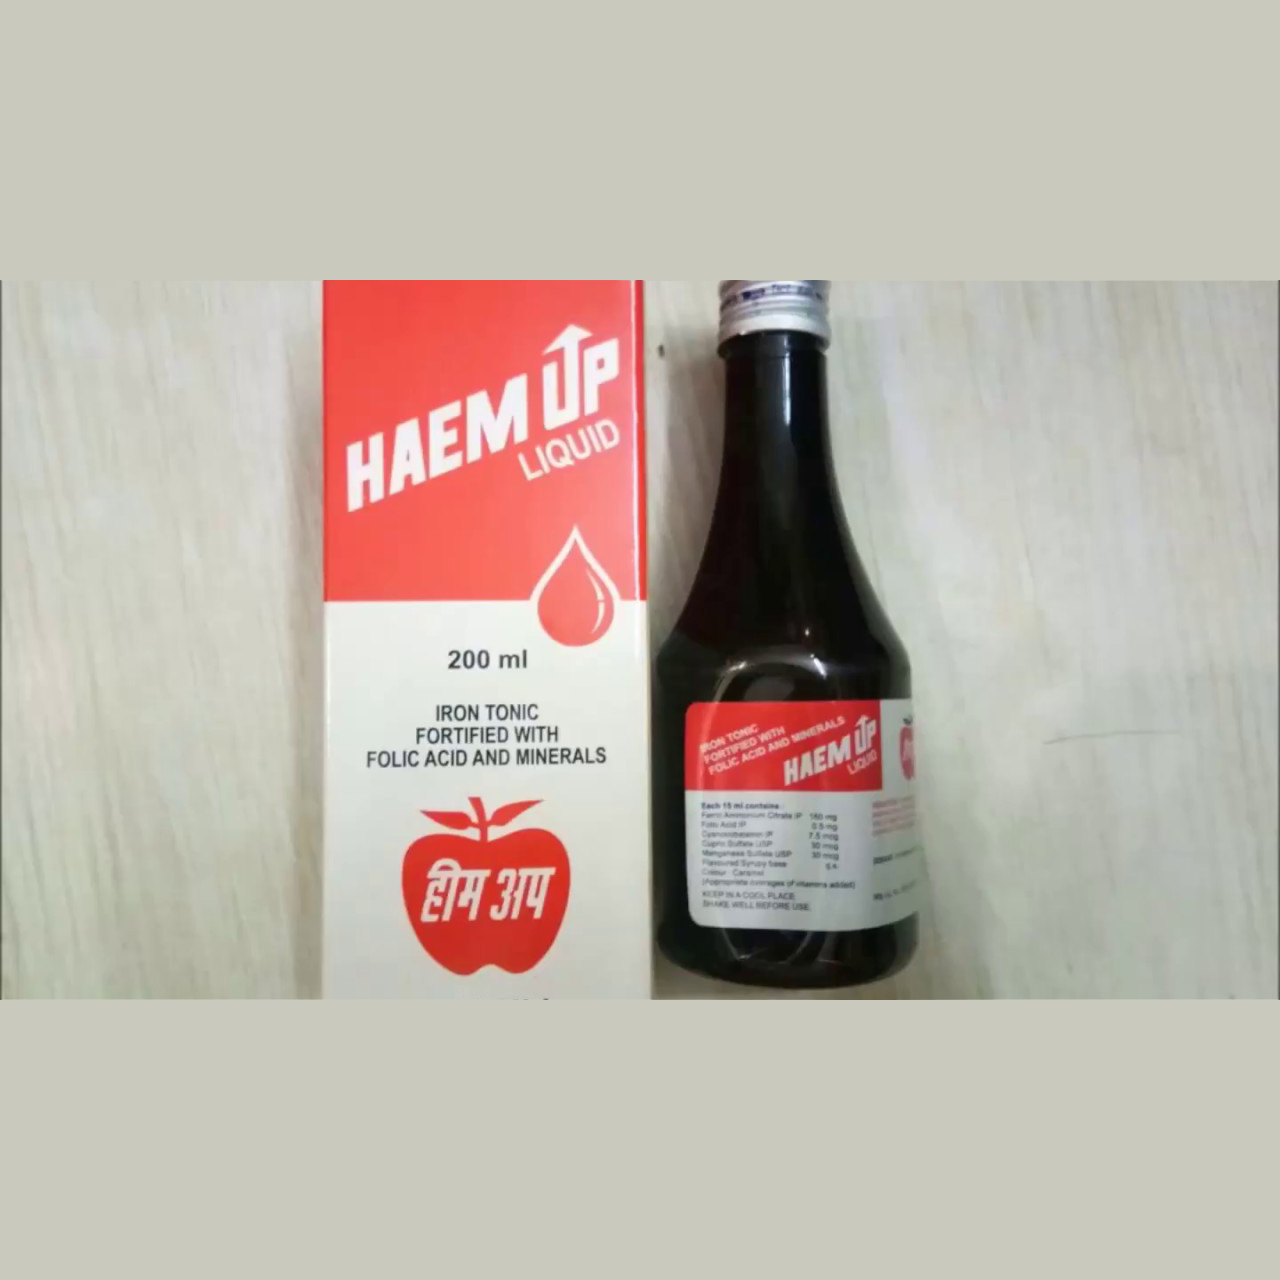 Buy Haem UP Liquid 200ml With Fast Shipping | 24x7 Pharma